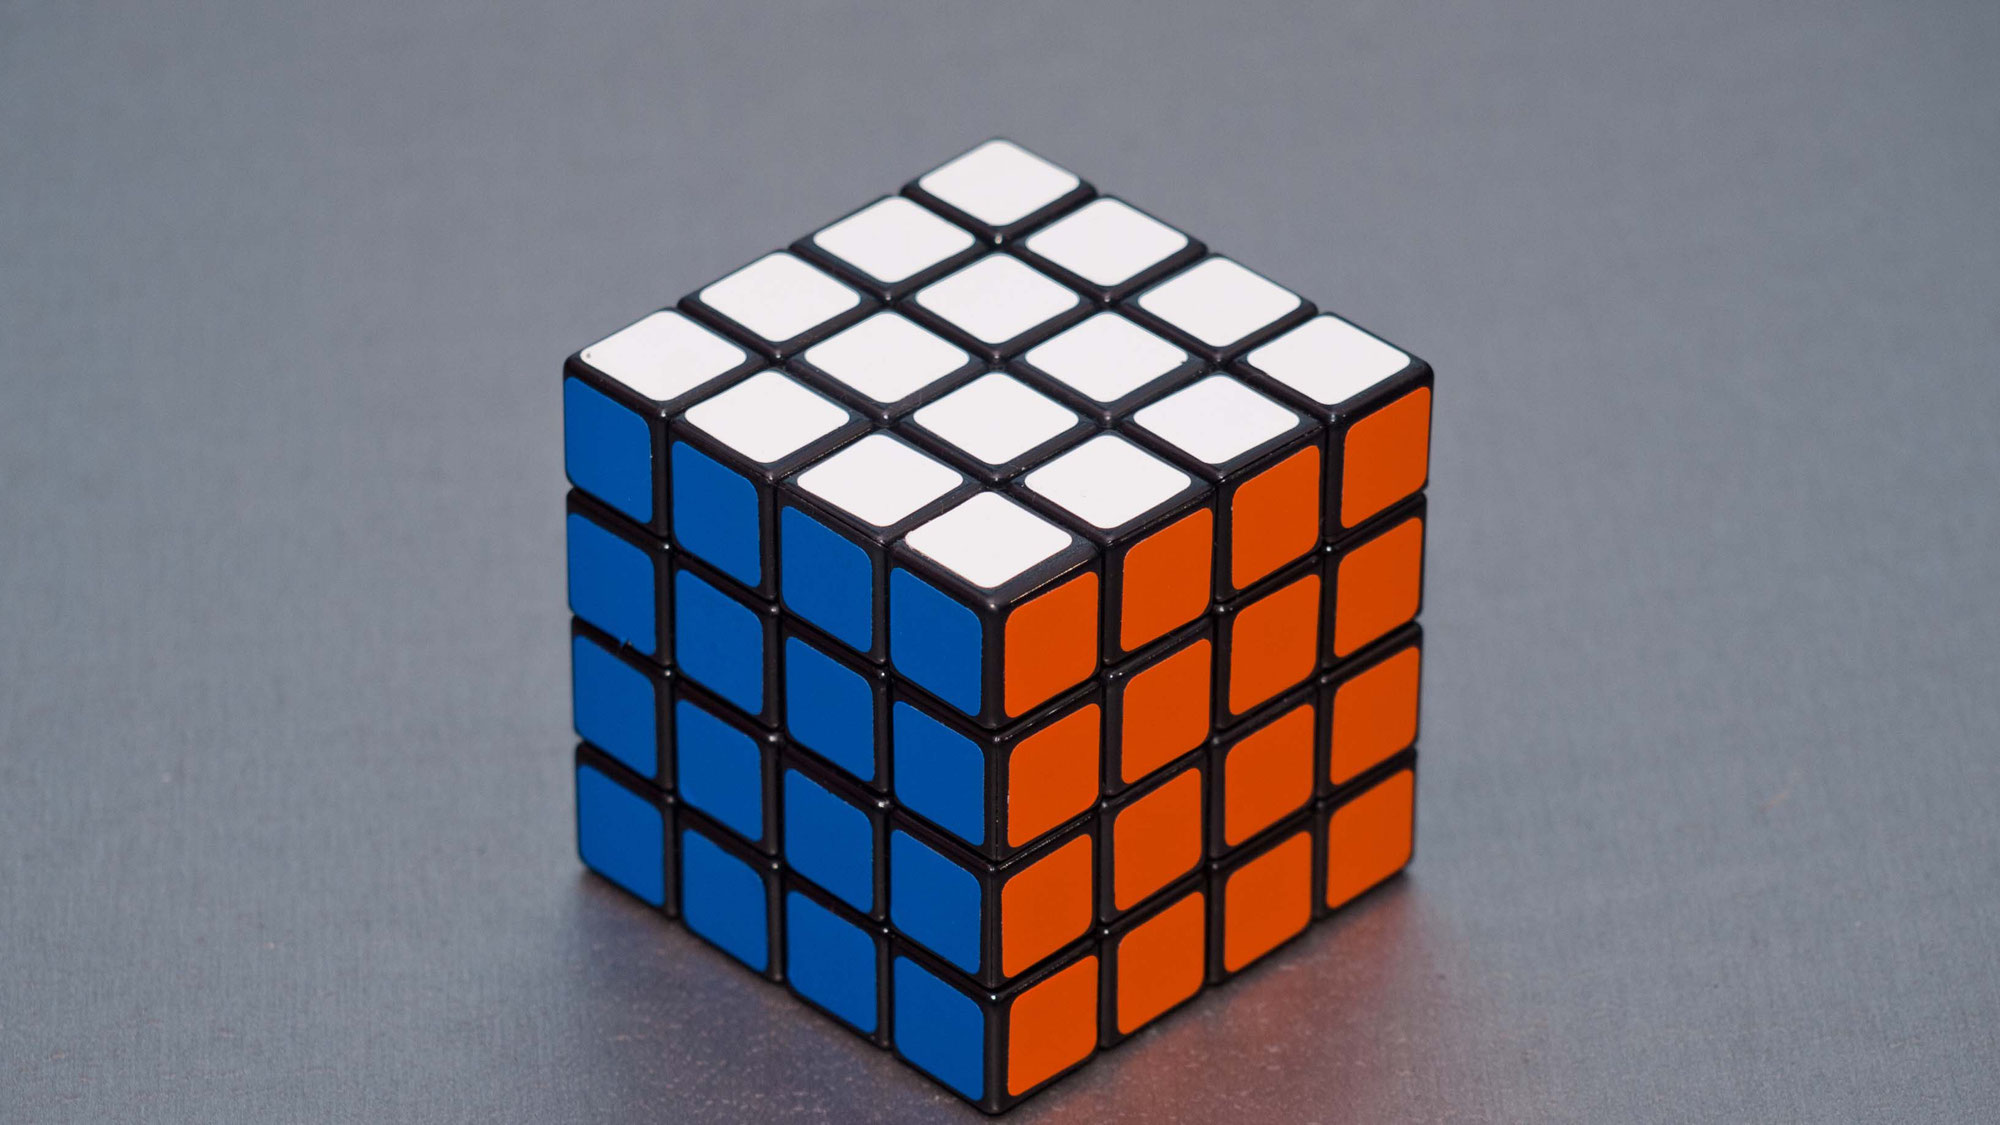 X4 cube. Кубик рубик 4х4. Кубик рубик 4 на 4. 4x4x4 Cube. Rubik's Cube 4x4.